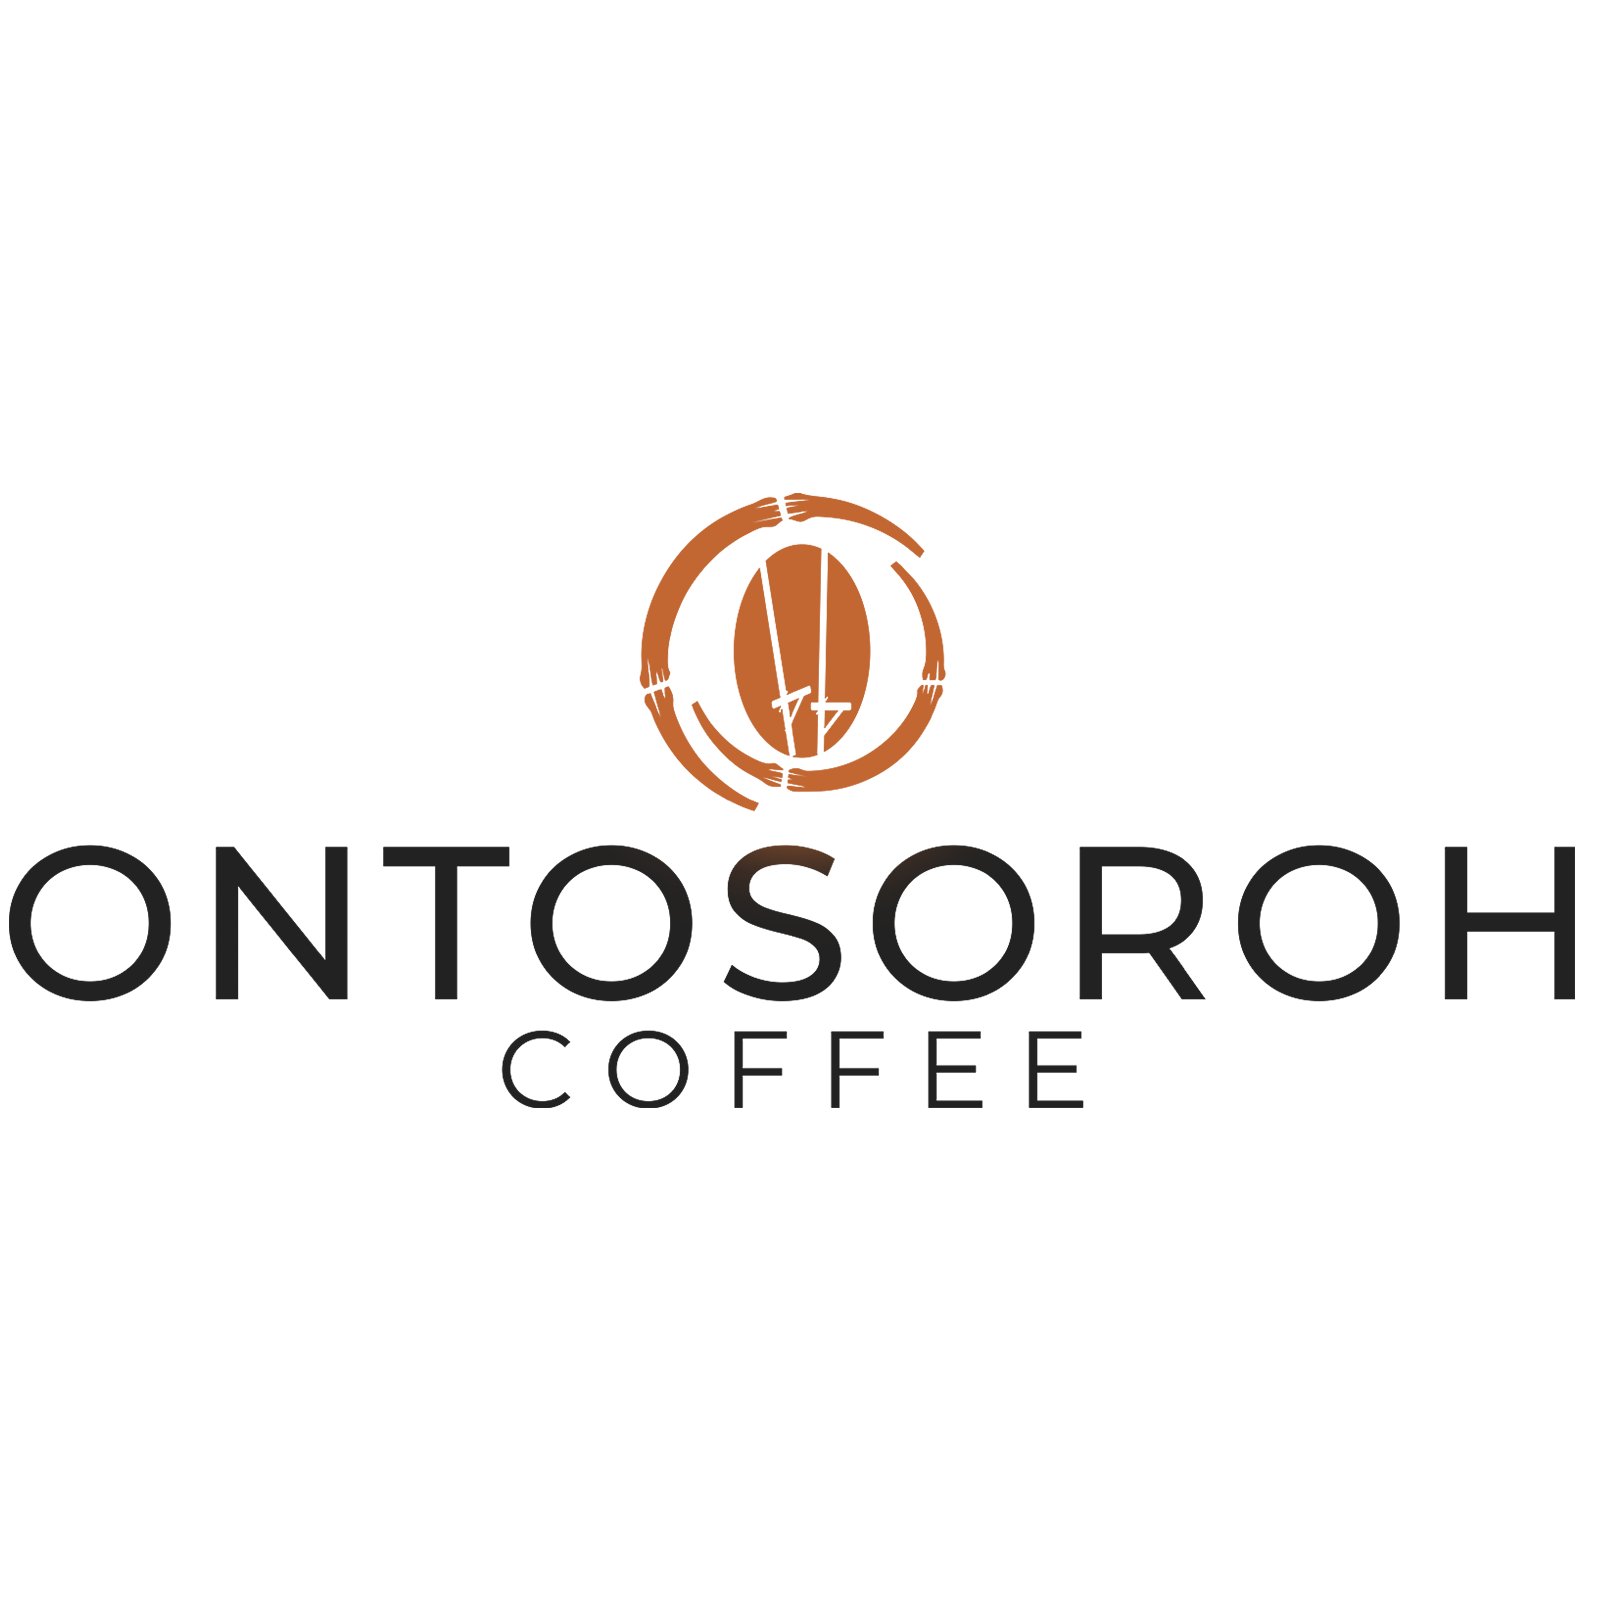 Ontosoroh Coffee